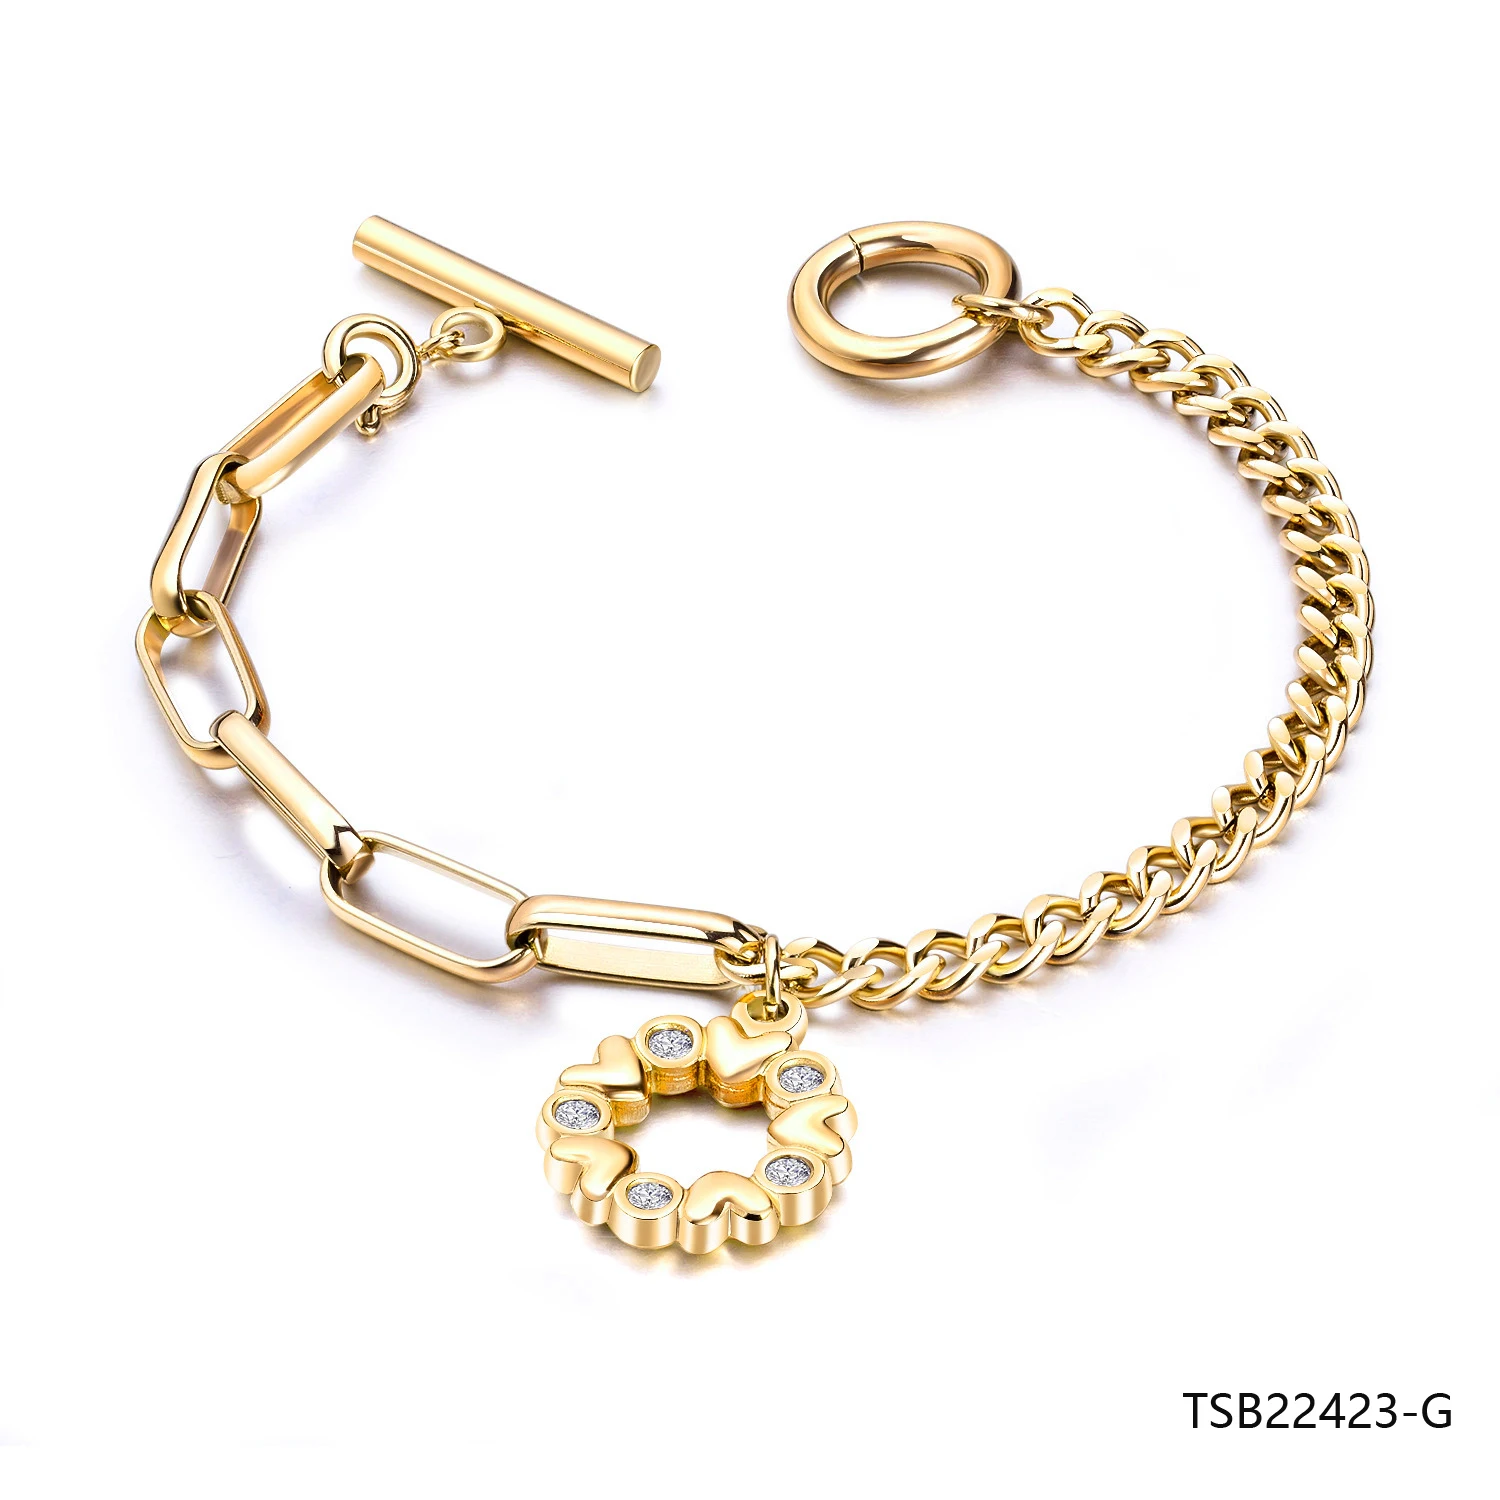 Design Earring Studs Elegant Fashion Women Jewelry Girl Gifts Nice TSB22423